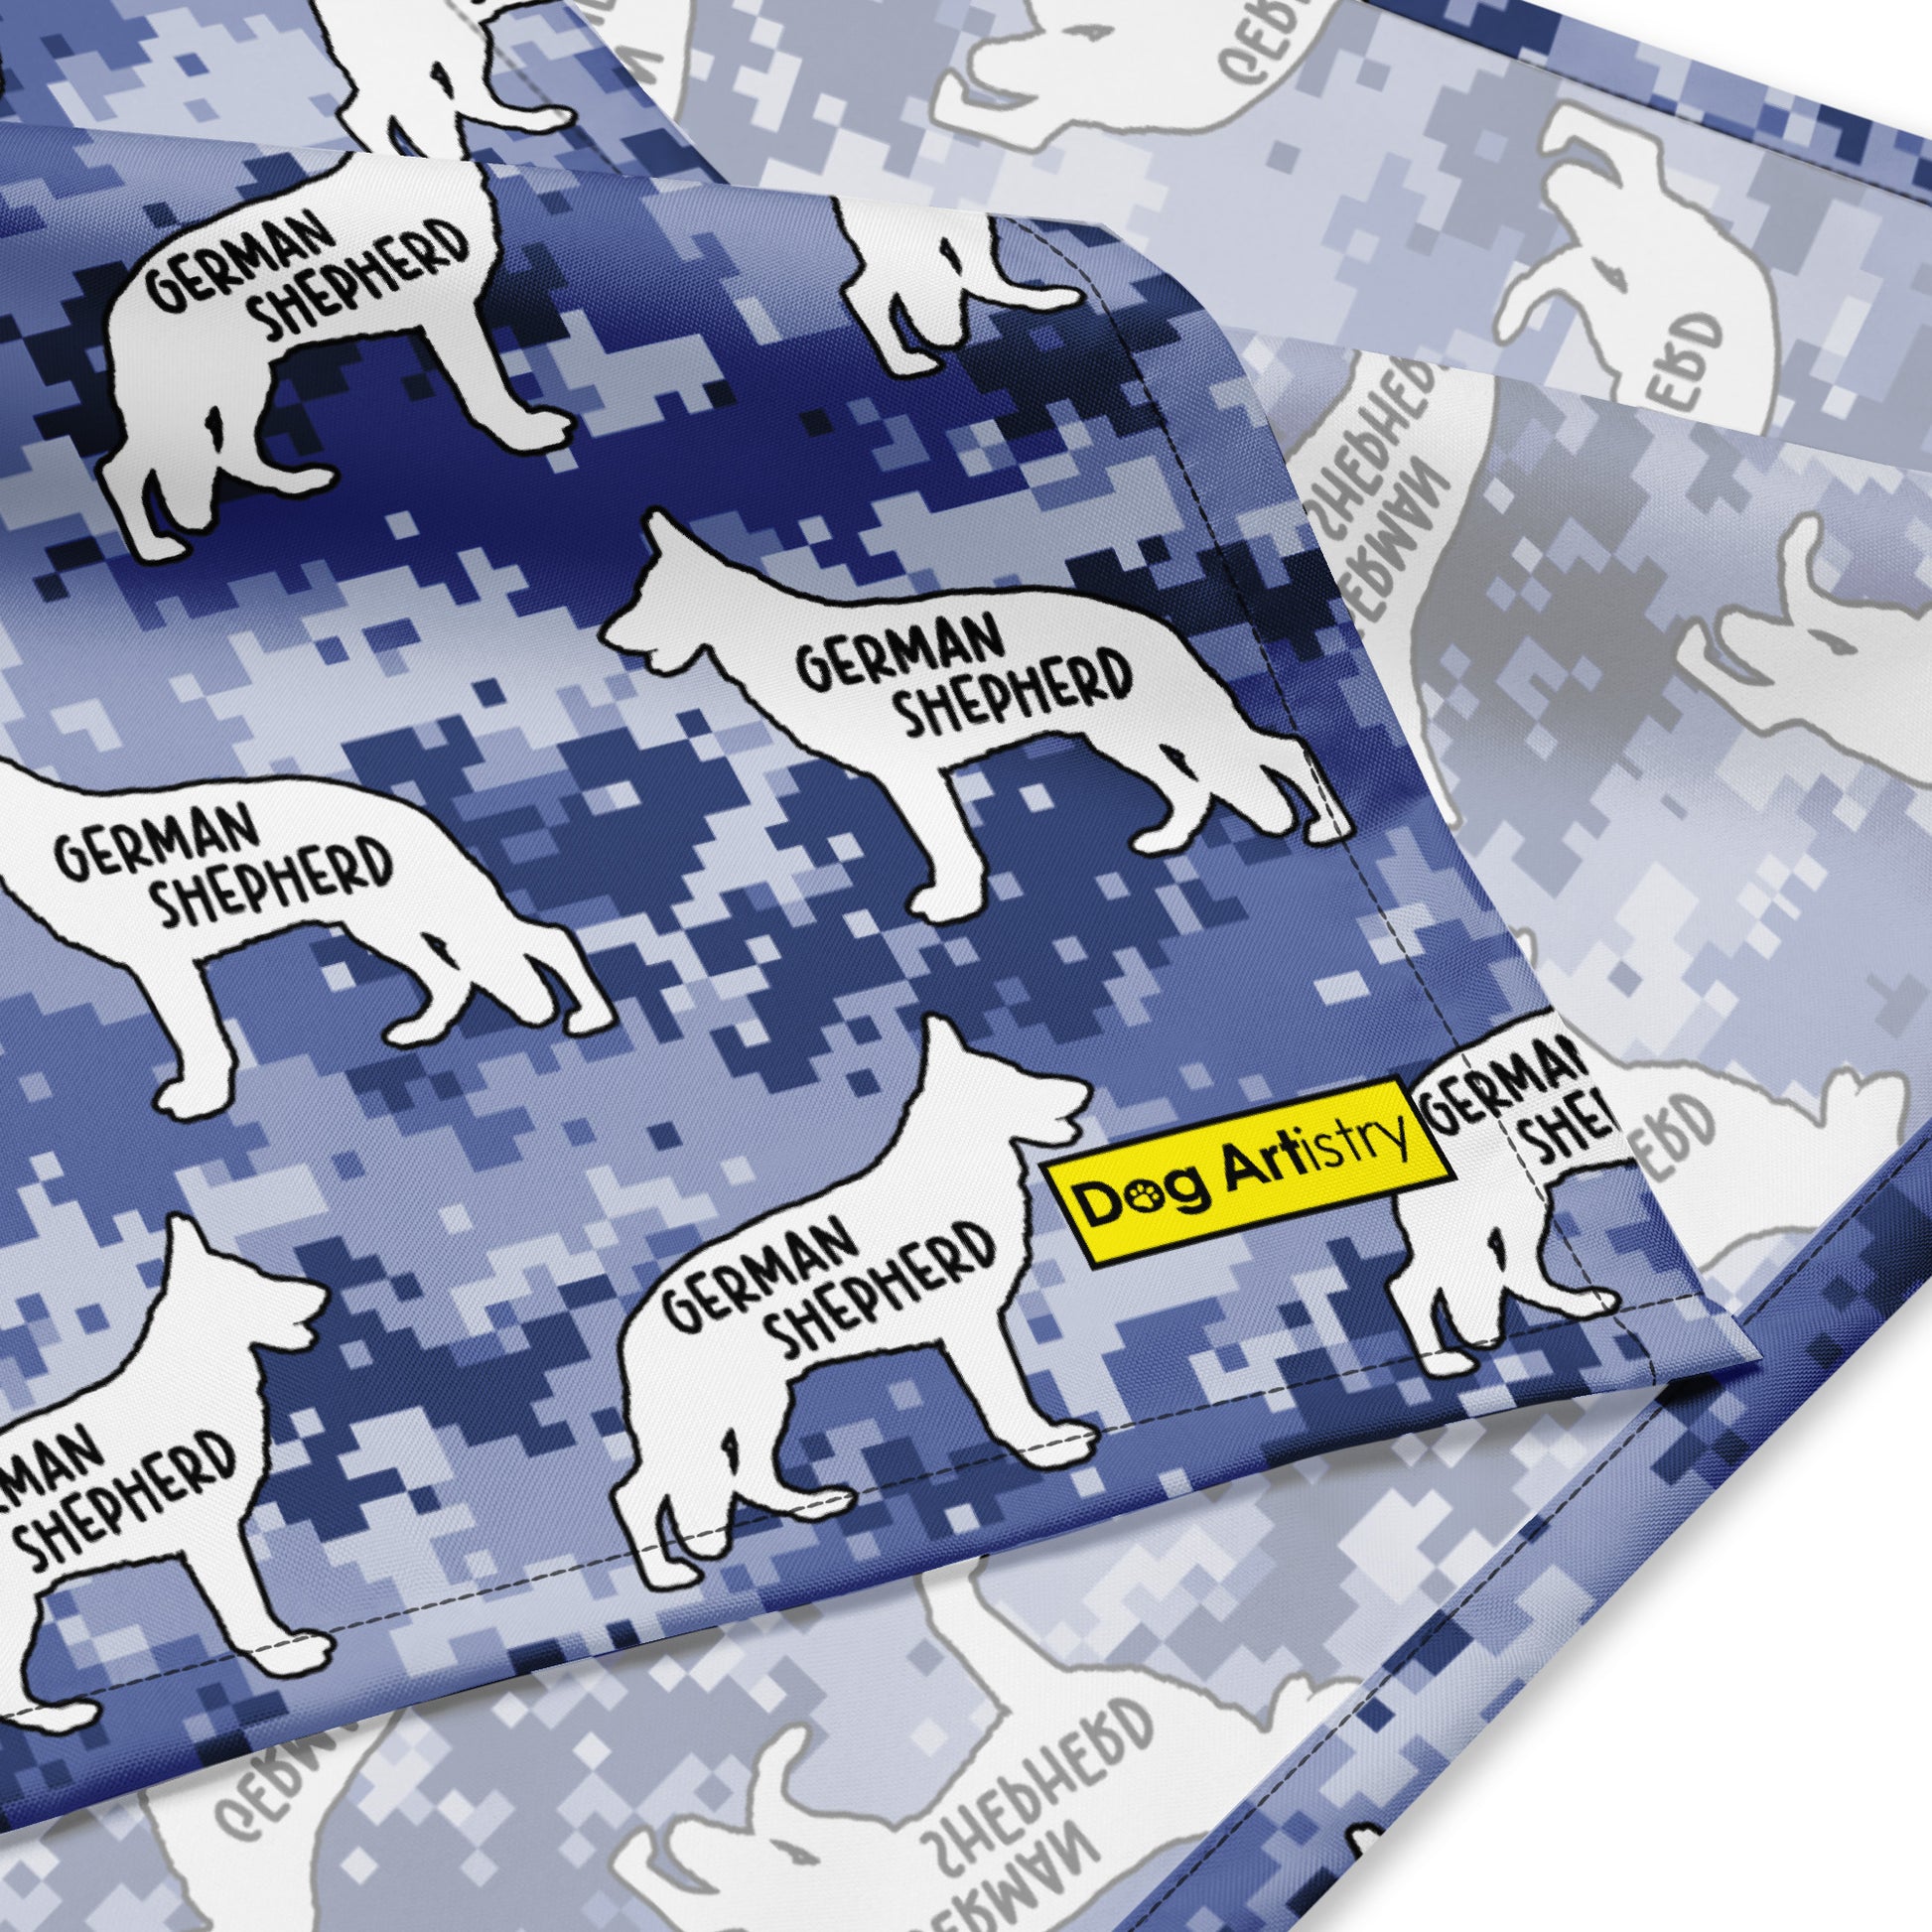 German Shepherd camouflage bandana by Dog Artistry